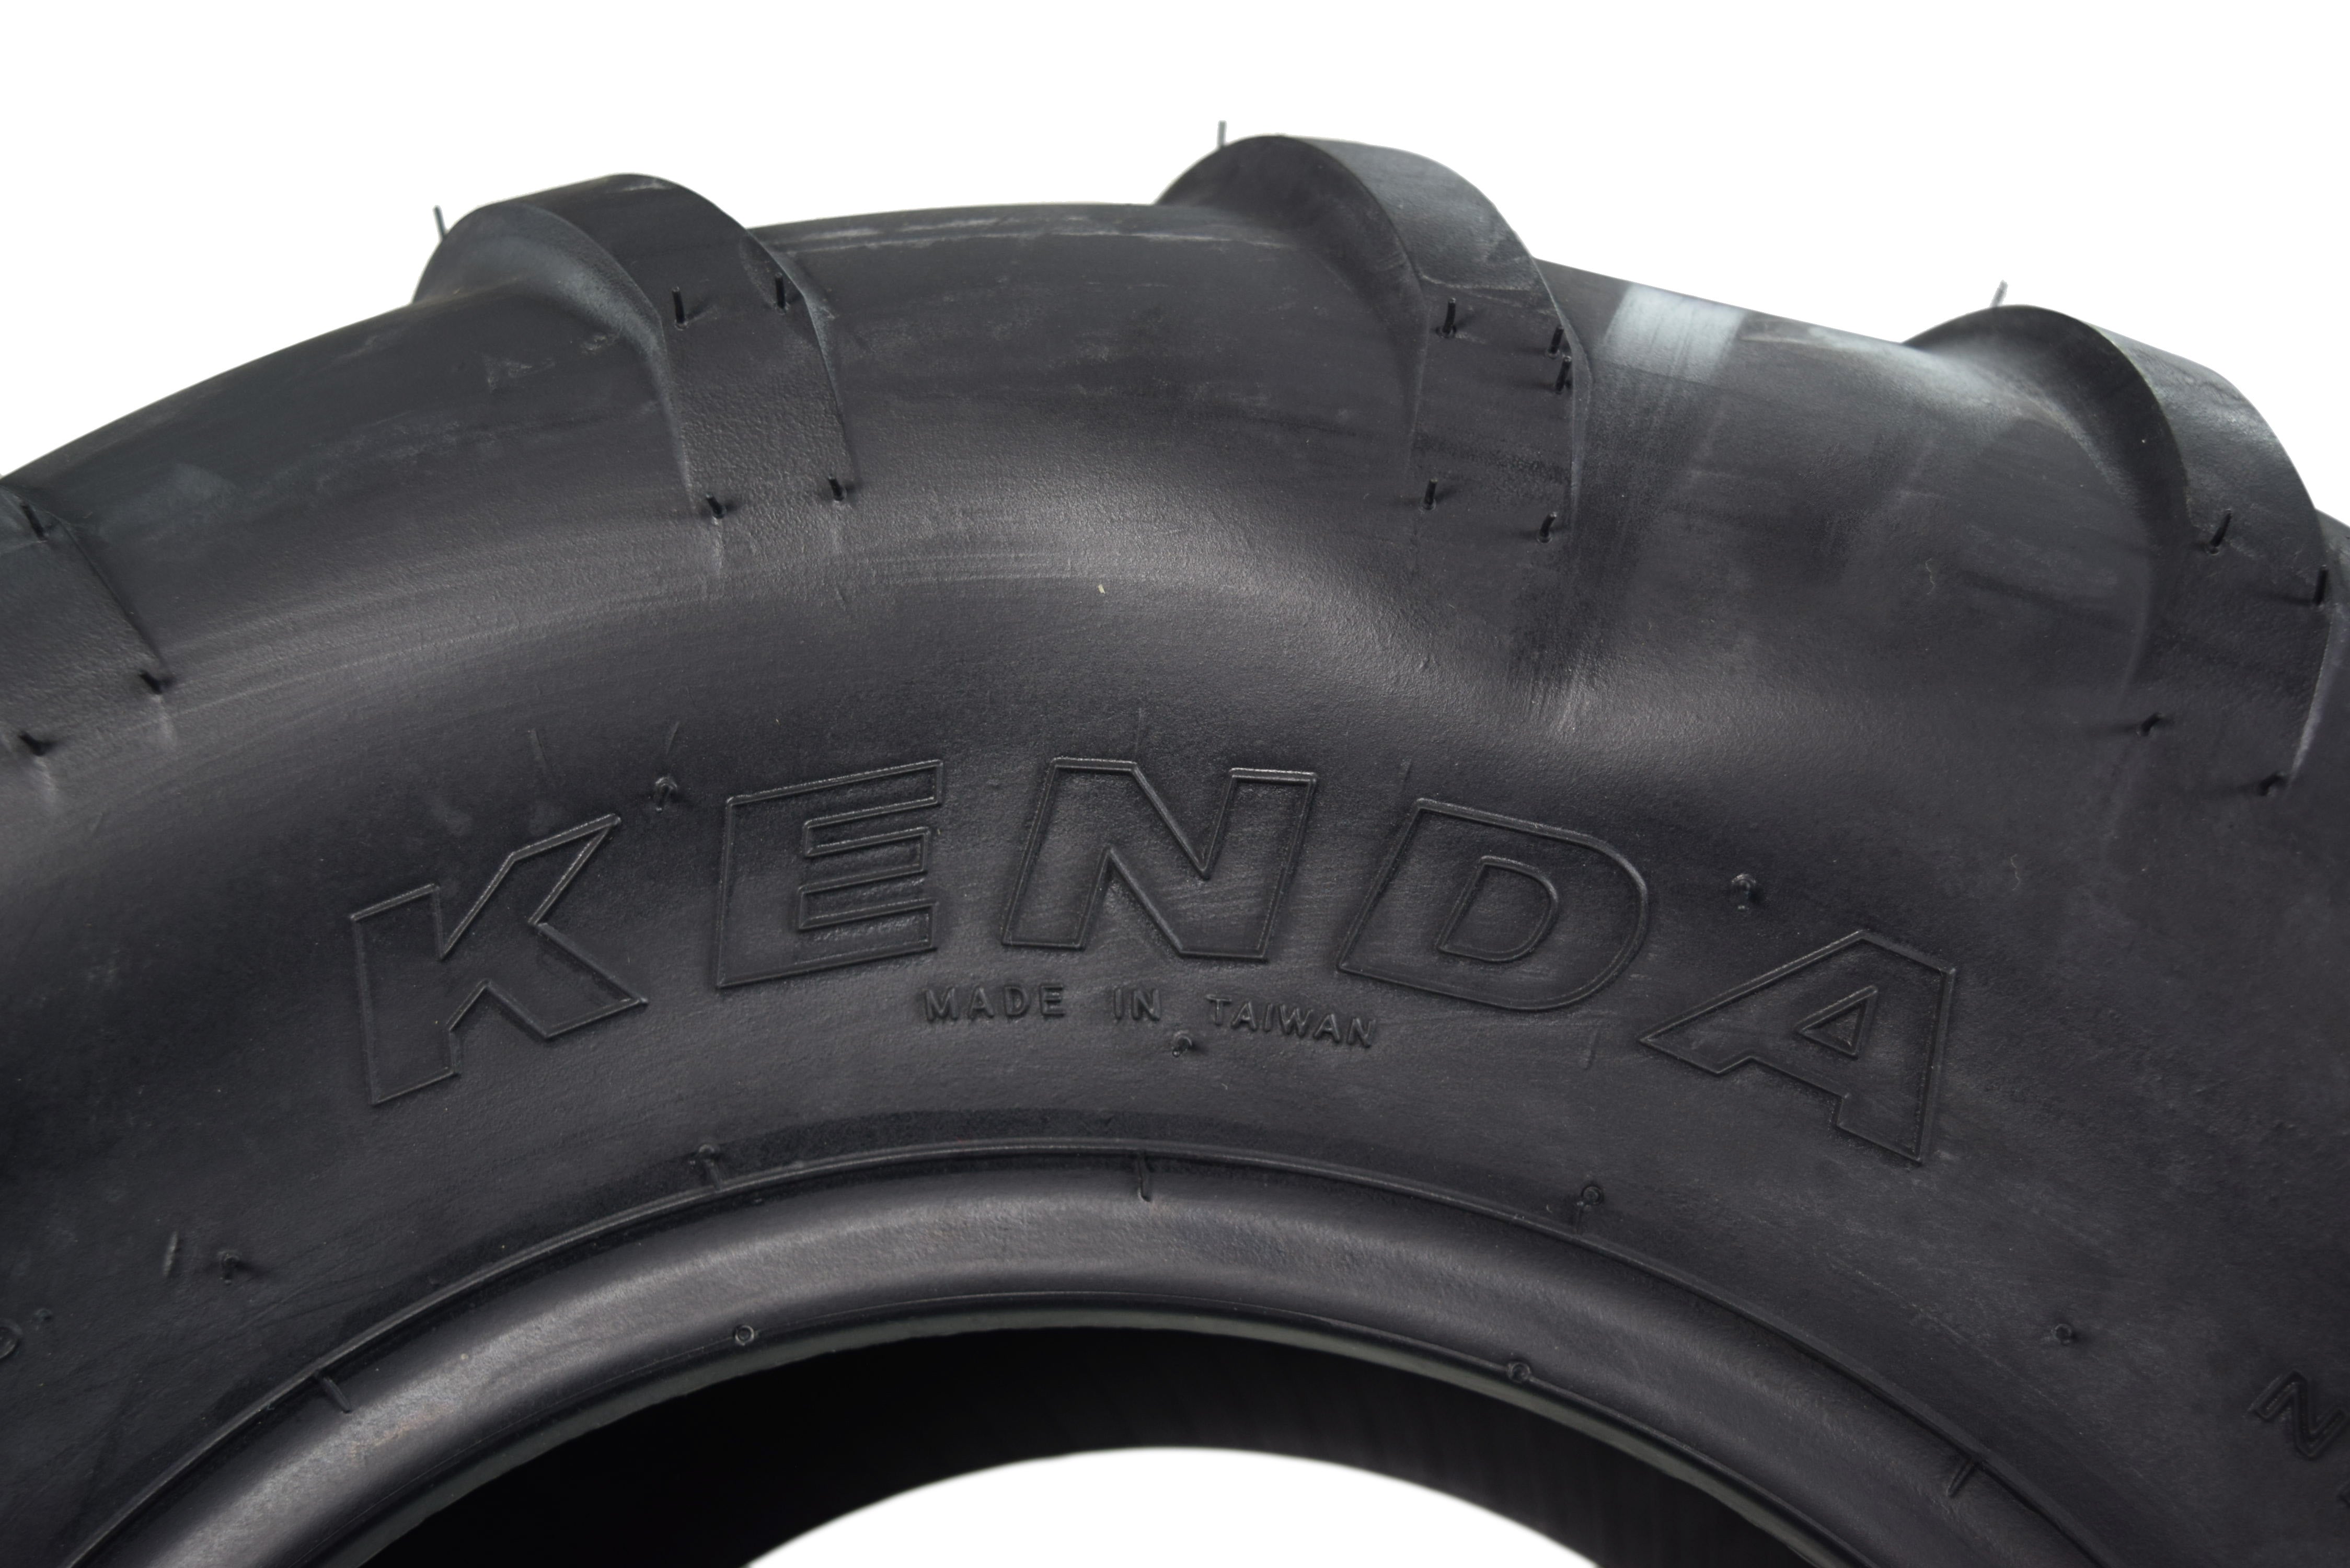 Kenda K472 22x11-10 Lawn and Garden Grasshopper Rear Tire 2 Pack